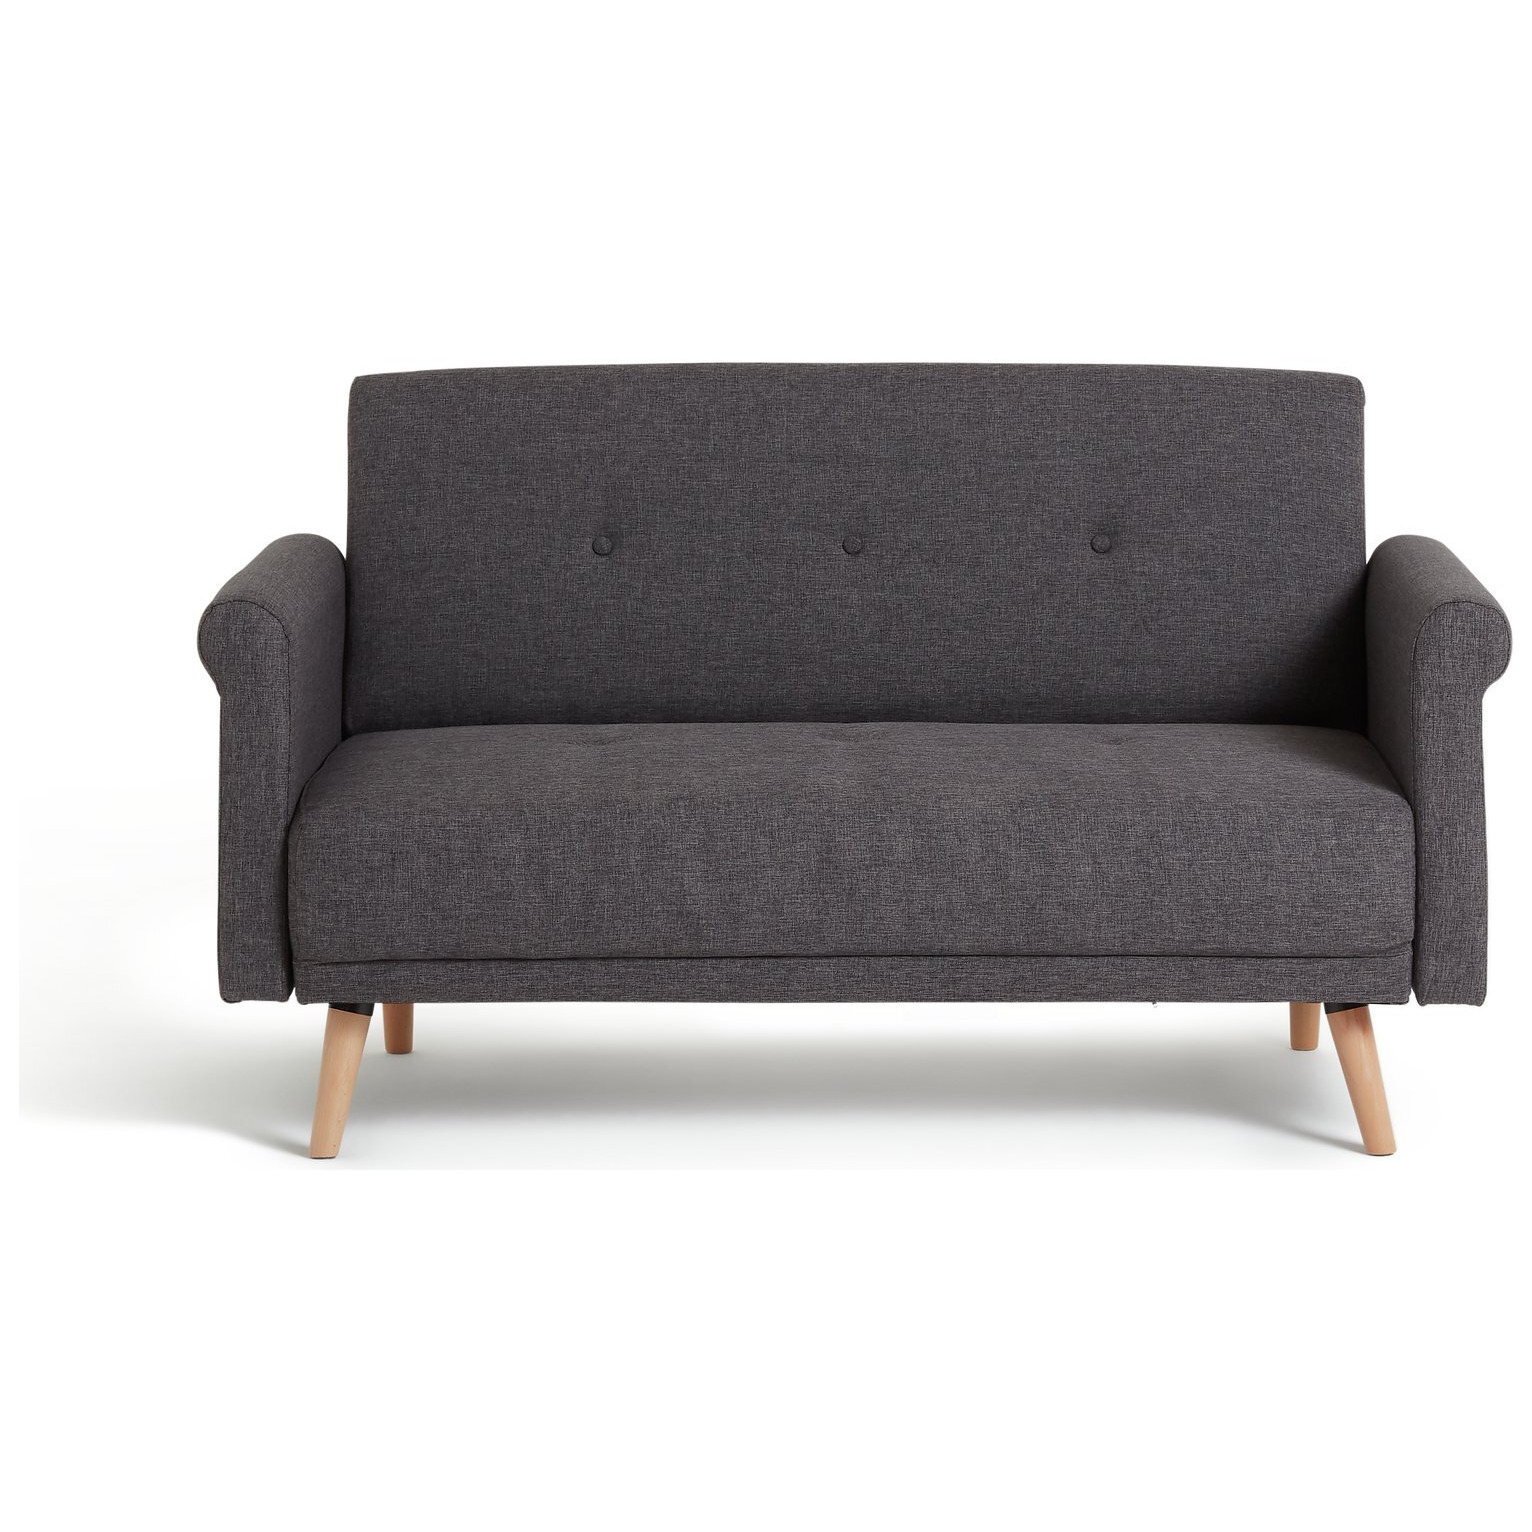 Habitat Evie Fabric 2 Seater Sofa in a Box - Charcoal - image 1